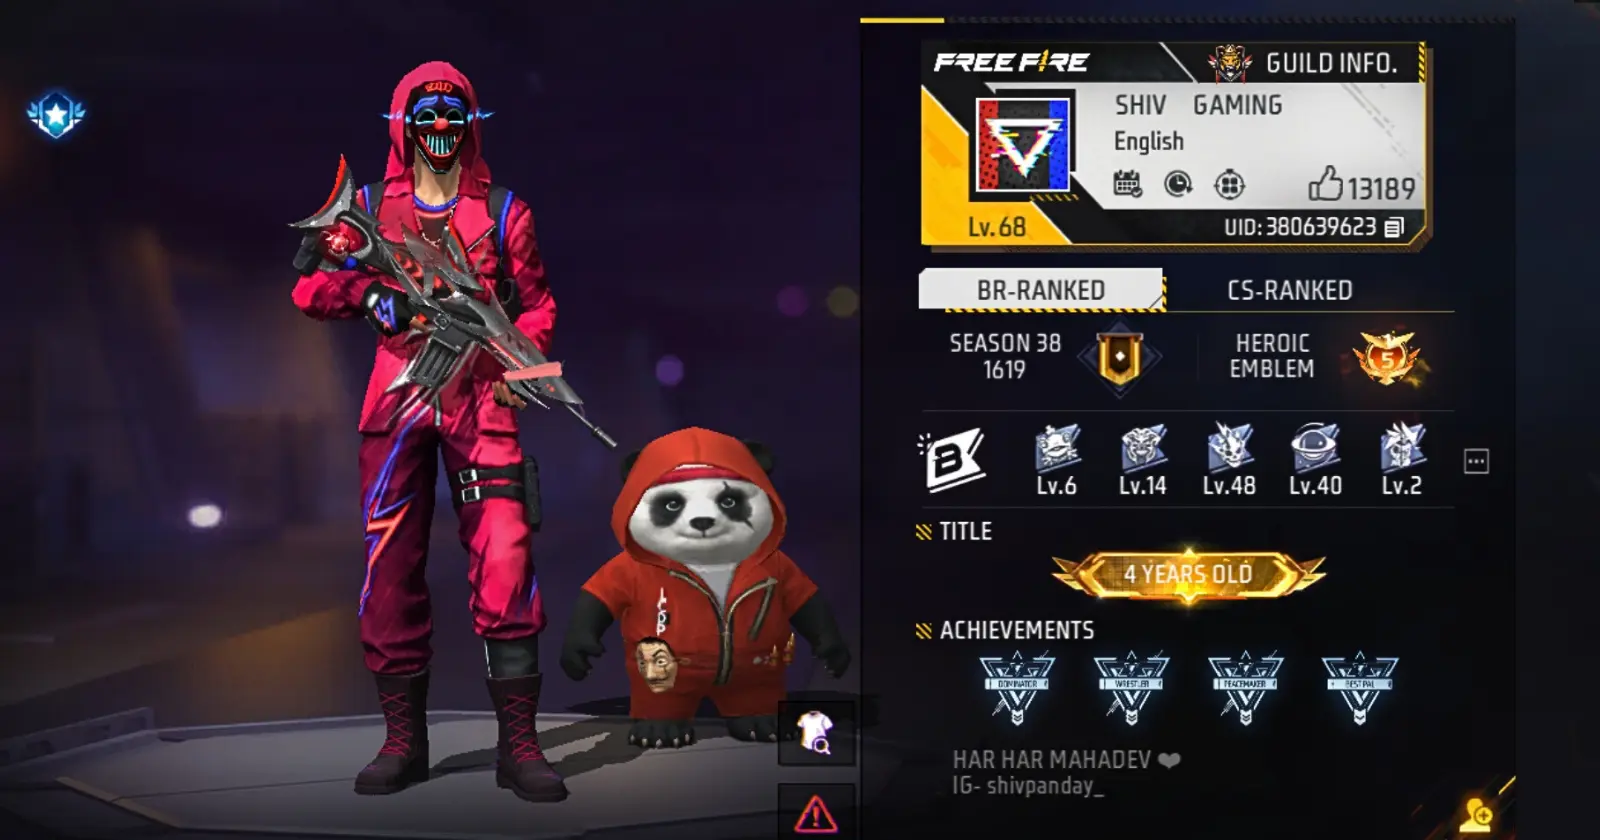 Shiv Gaming Free Fire UID profile screenshot, character wearing red criminal bundle and holding a gun.